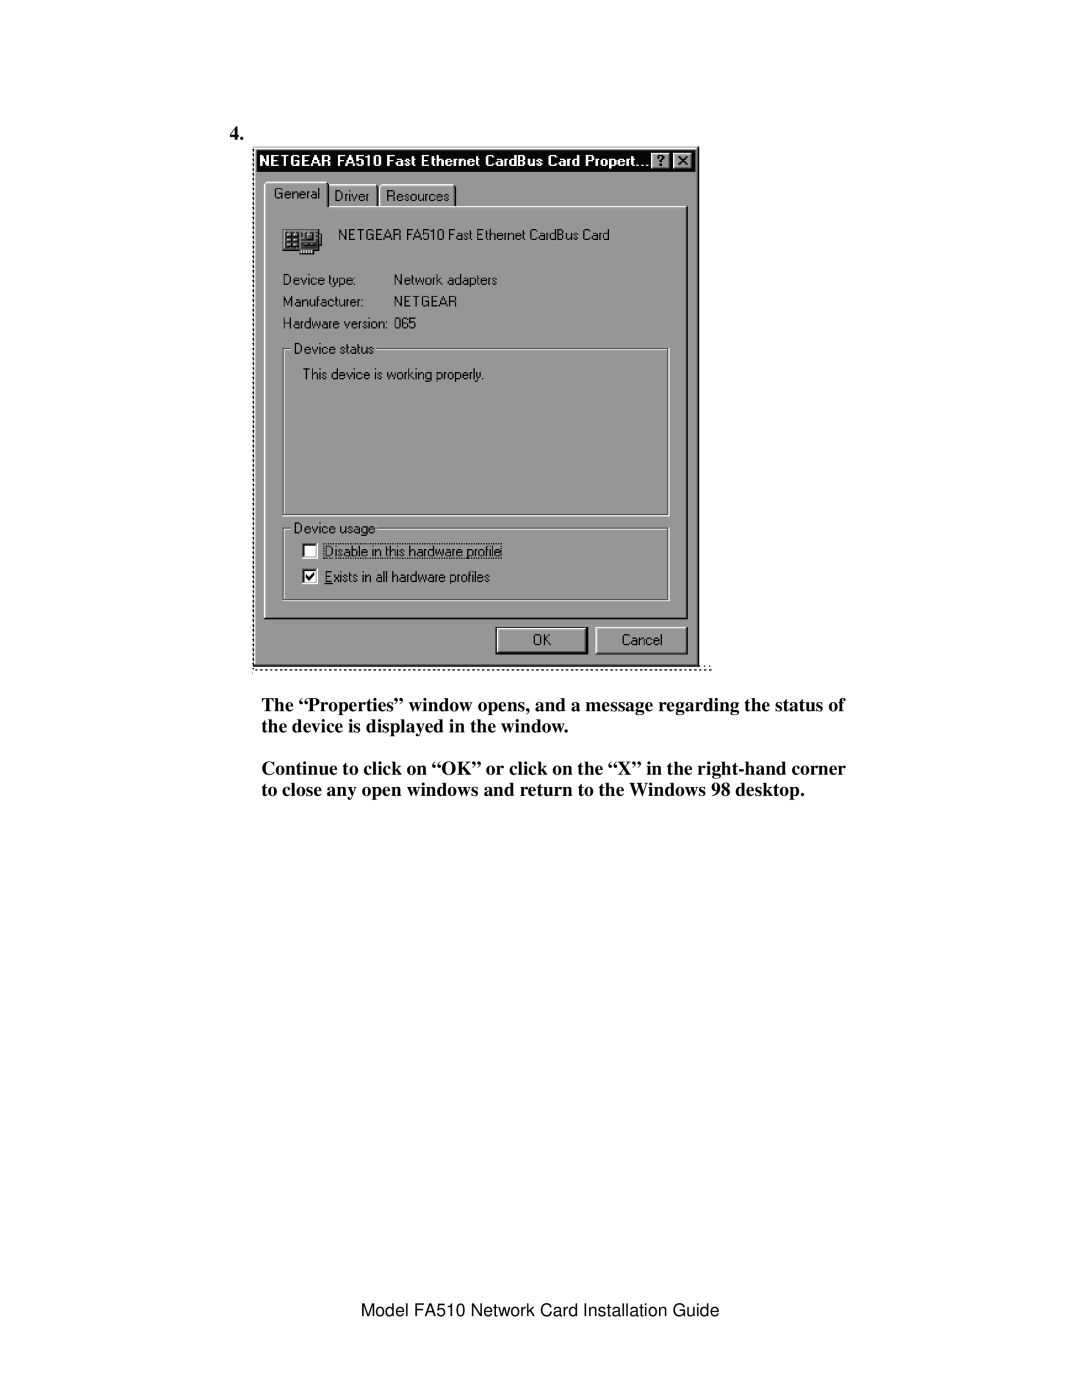 NETGEAR manual Model FA510 Network Card Installation Guide 